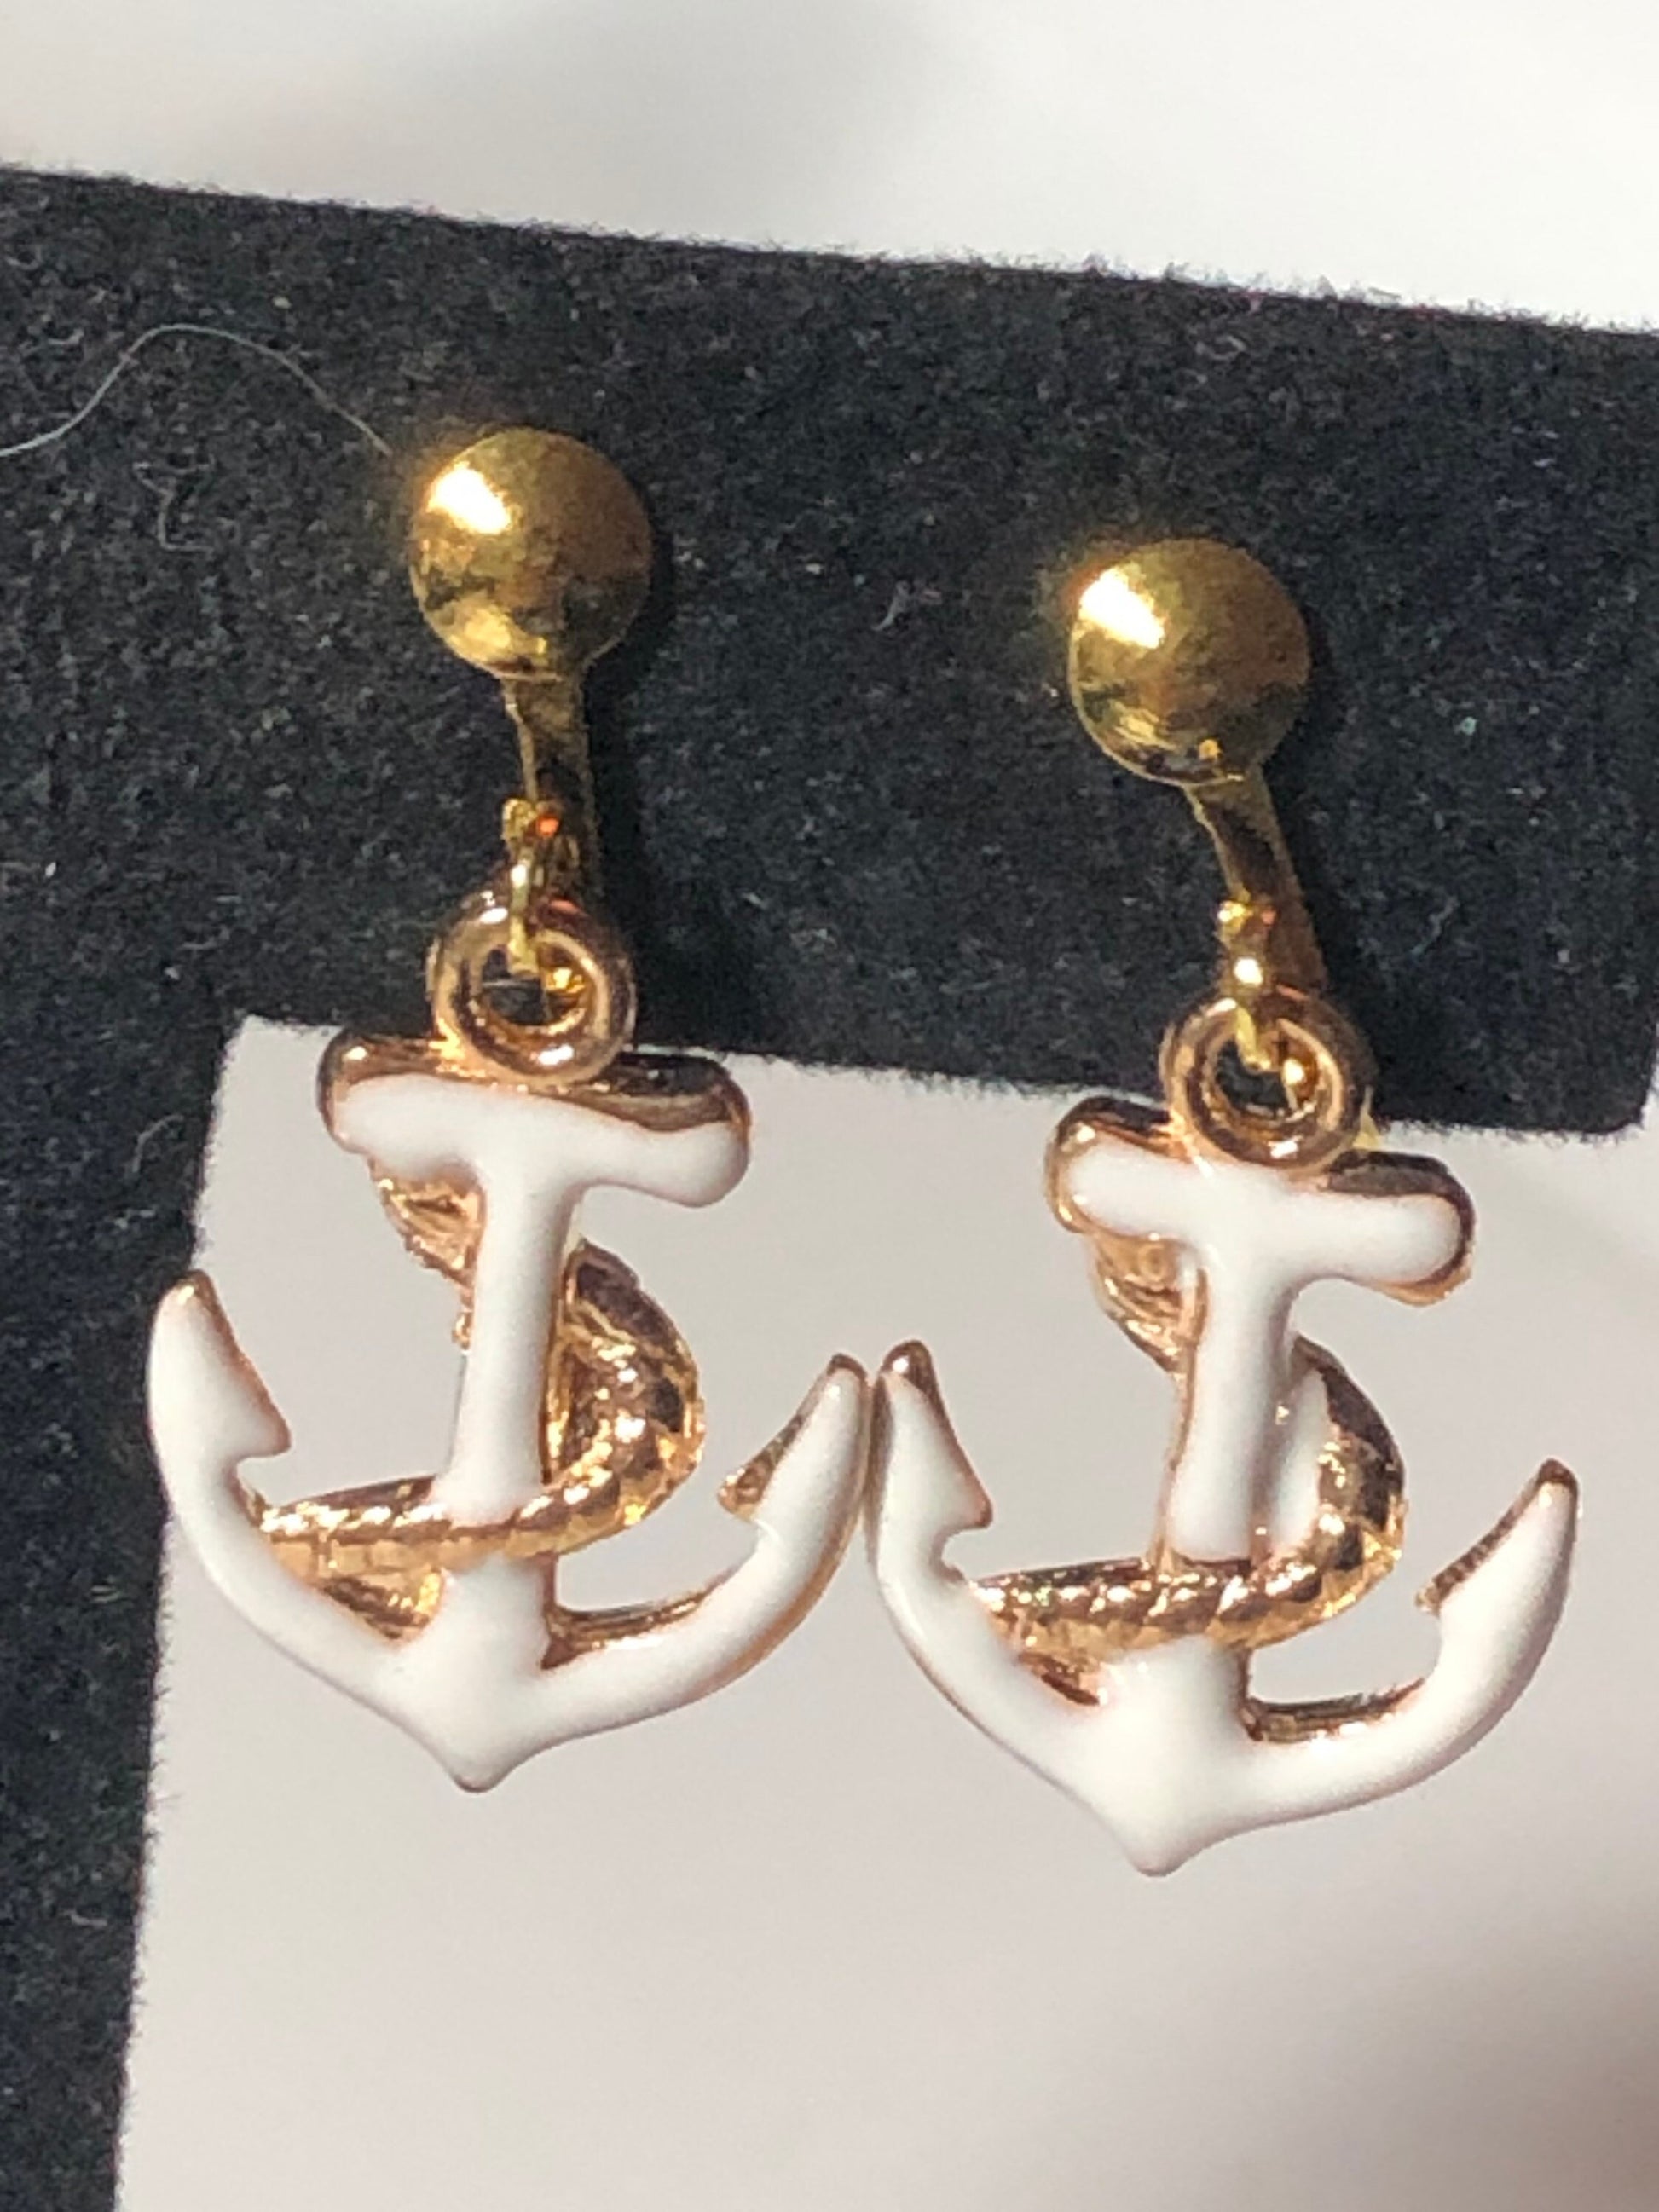 Nautical silver tone lighthouse drop earrings pierced ears